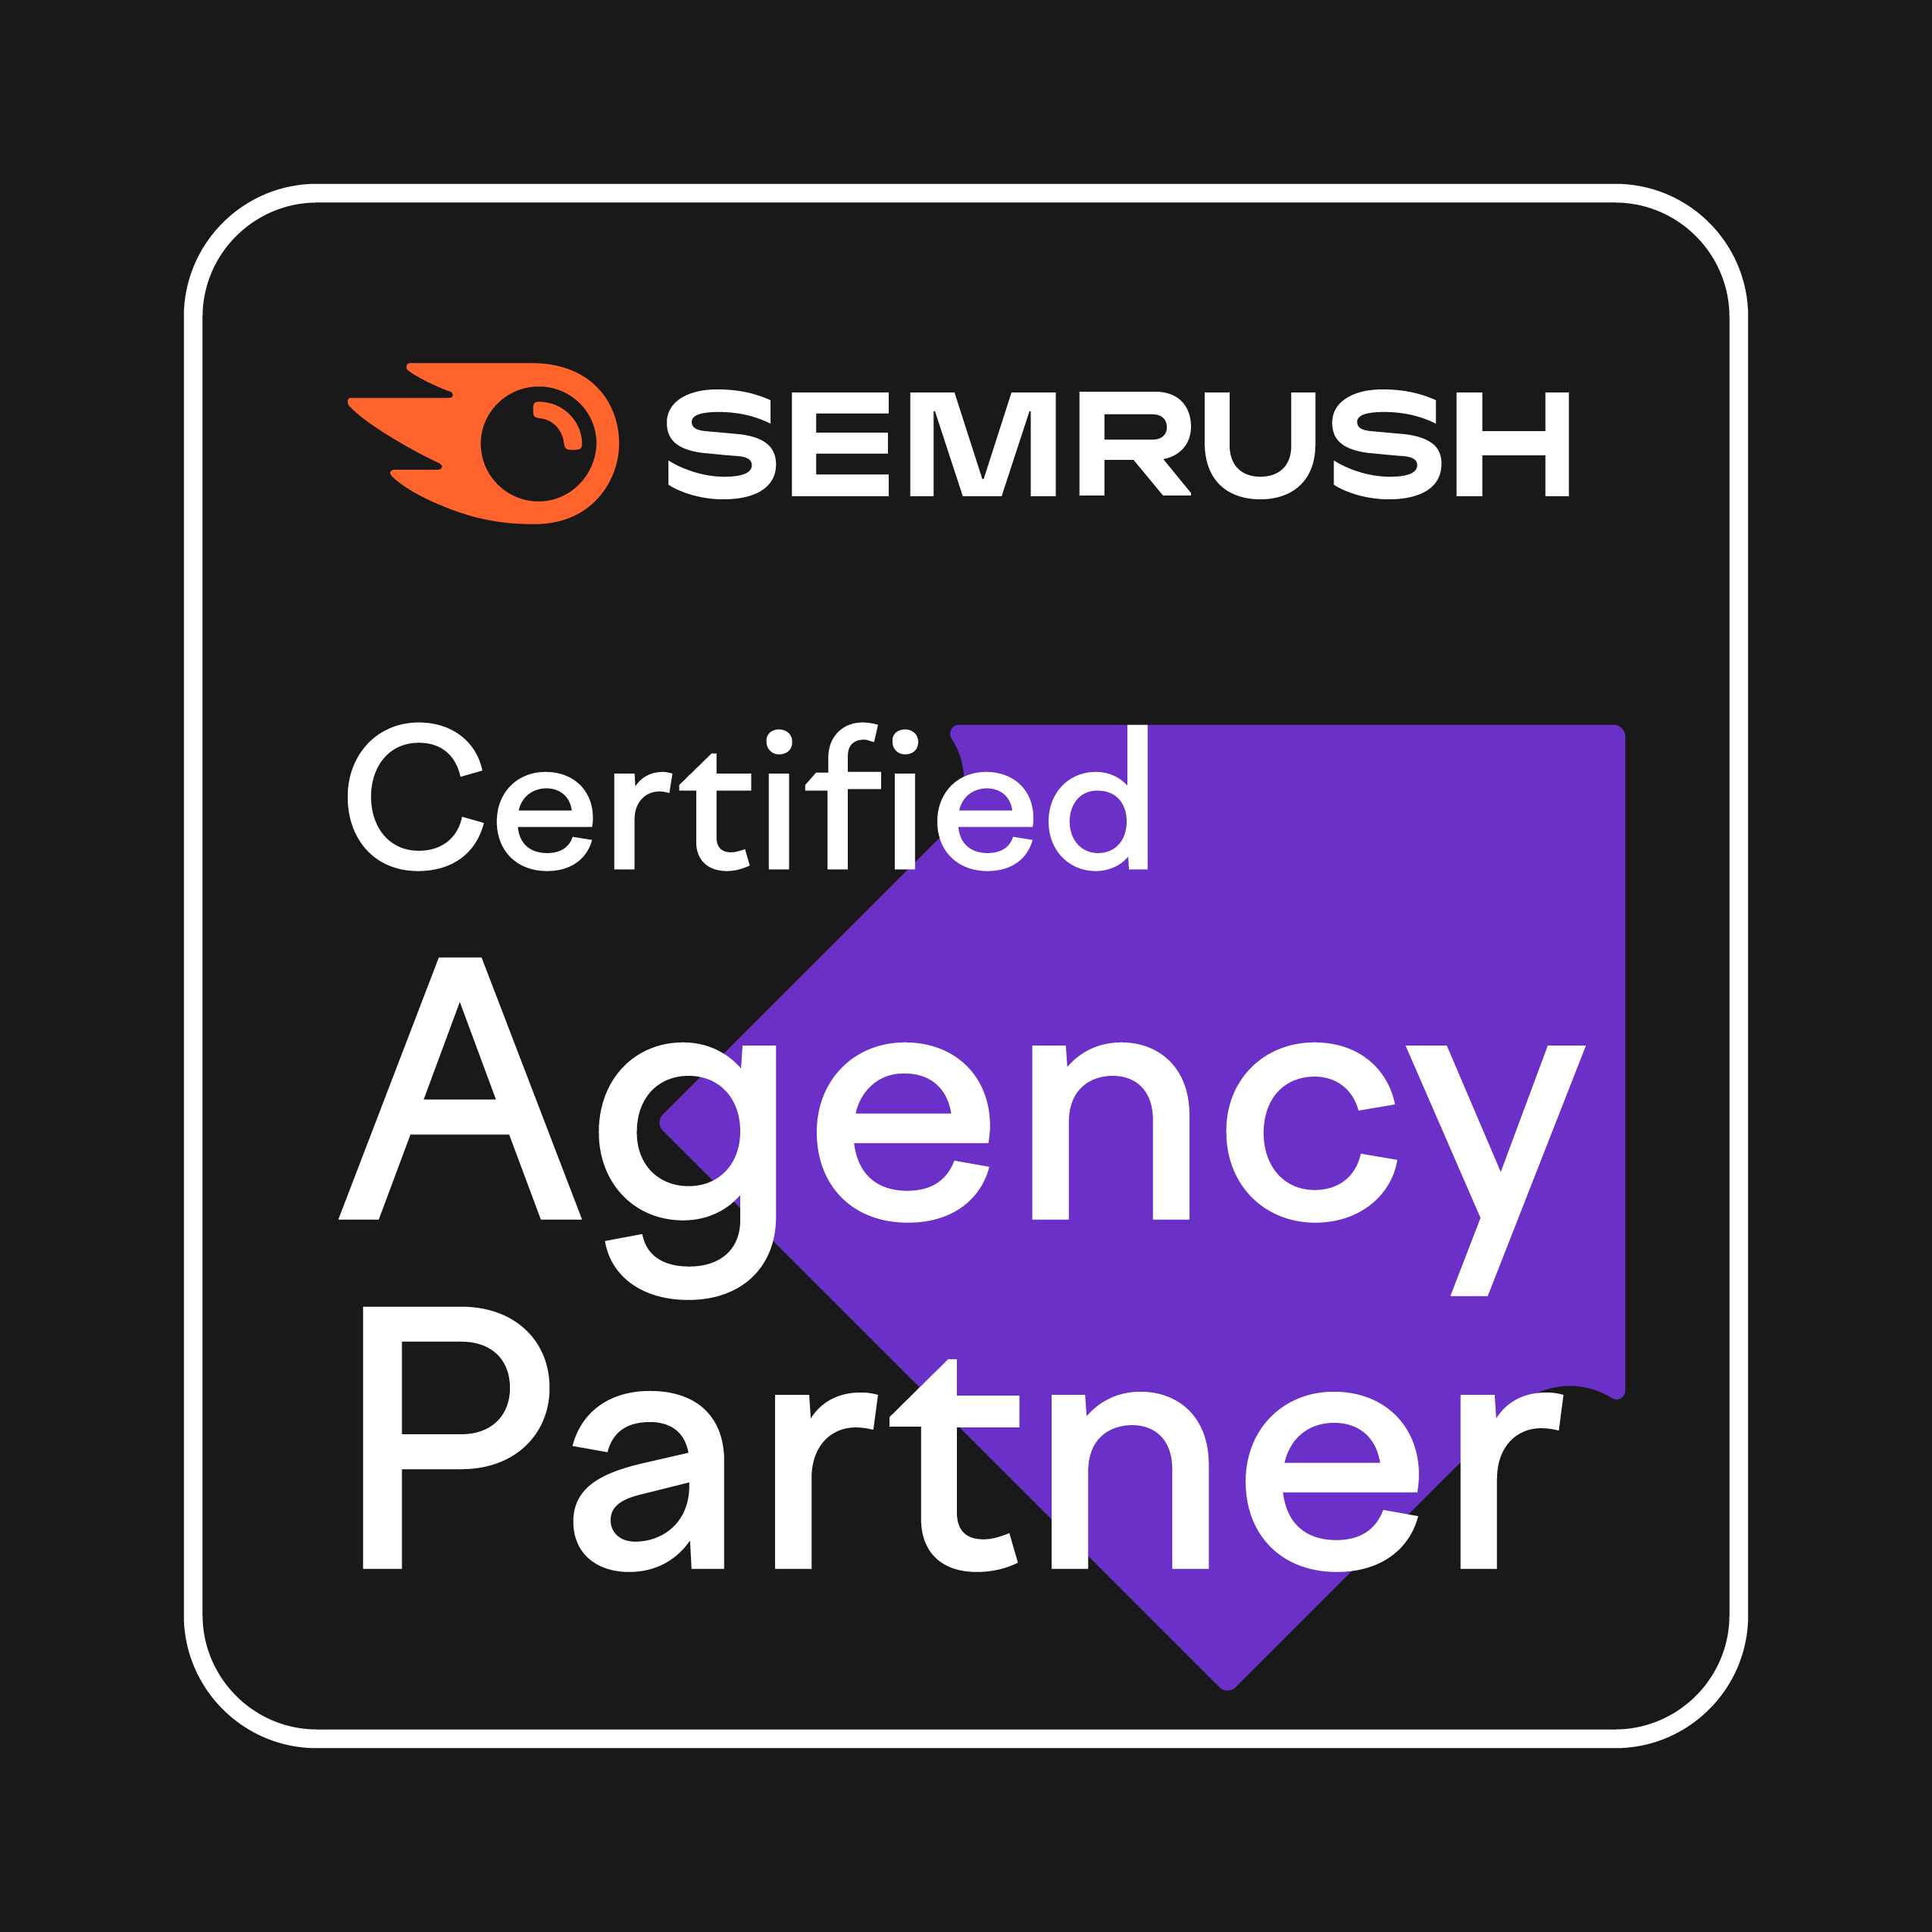 SEMrush Certified Agency Partner-Optimized Webmedia Marketing-Associations